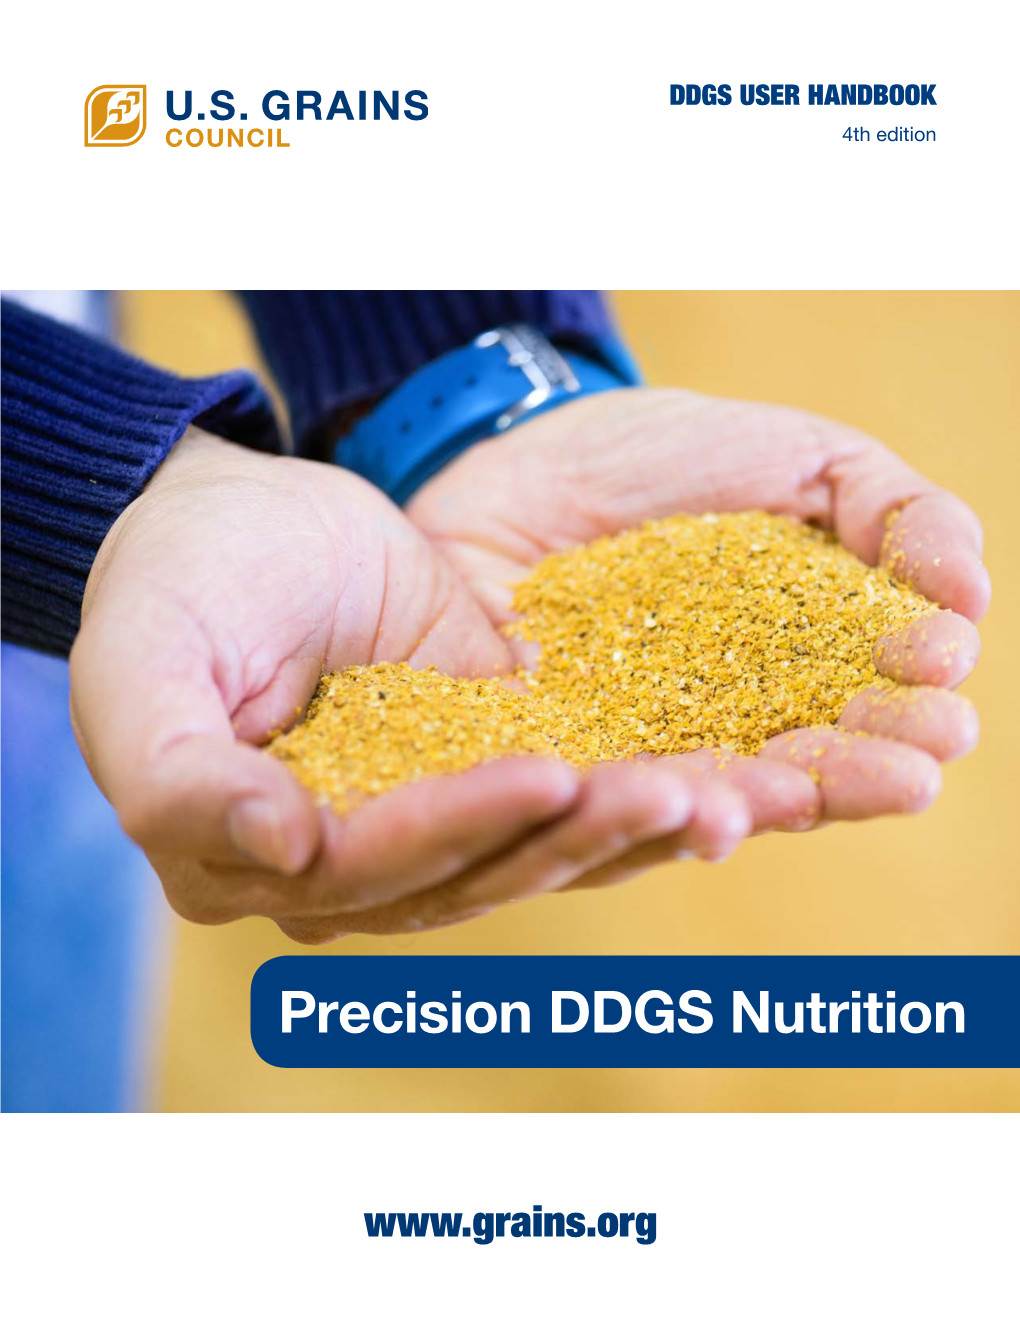 Precision DDGS Nutrition